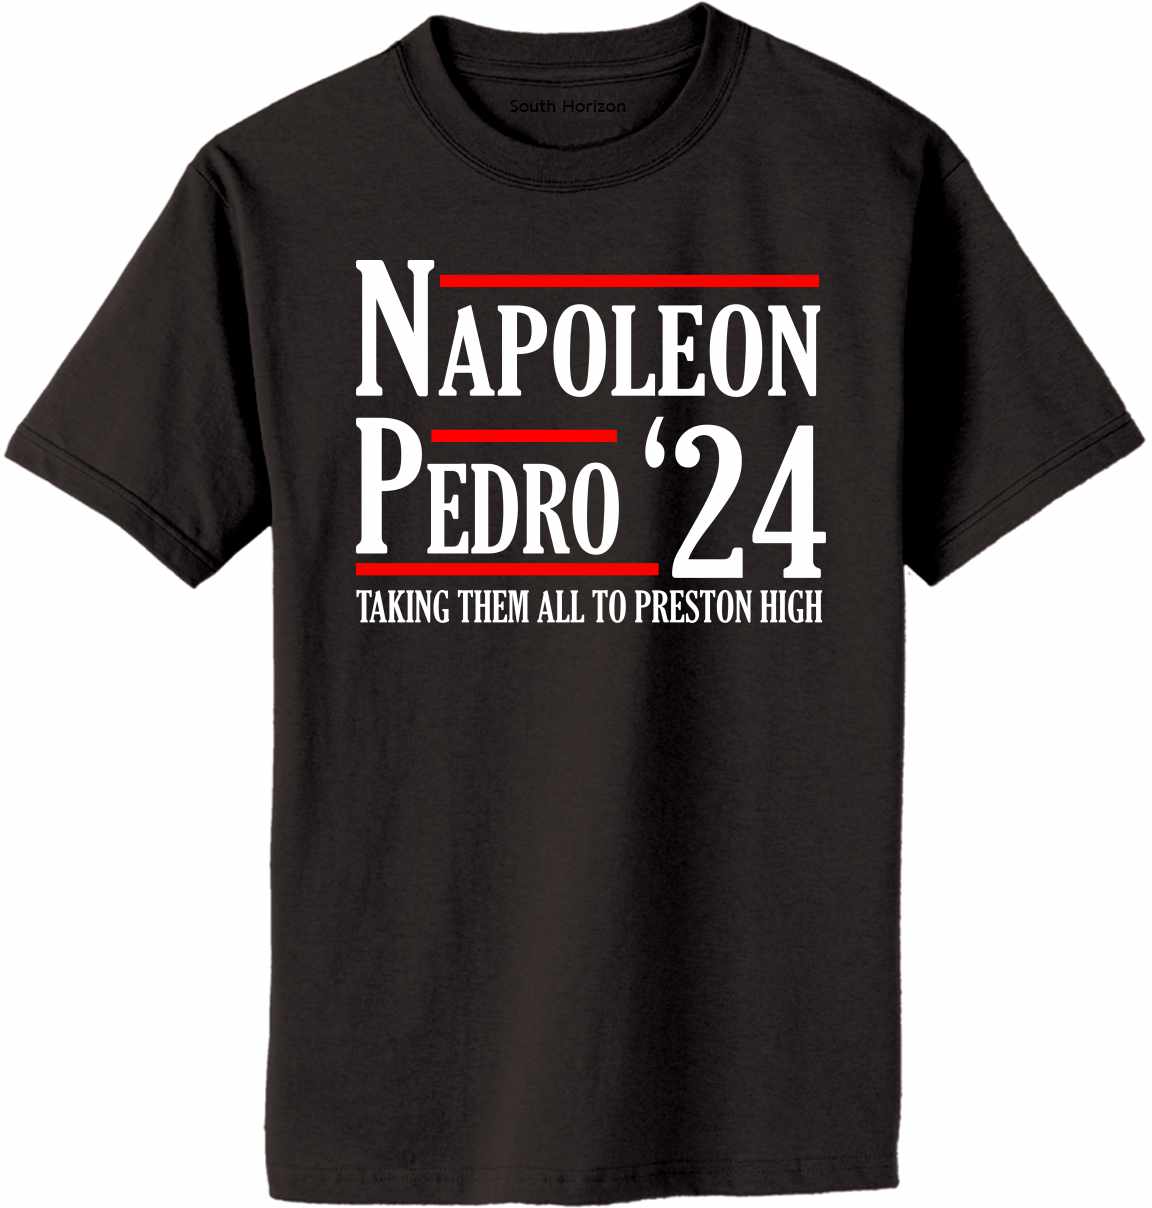 Napoleon Pedro 24 on Adult T-Shirt